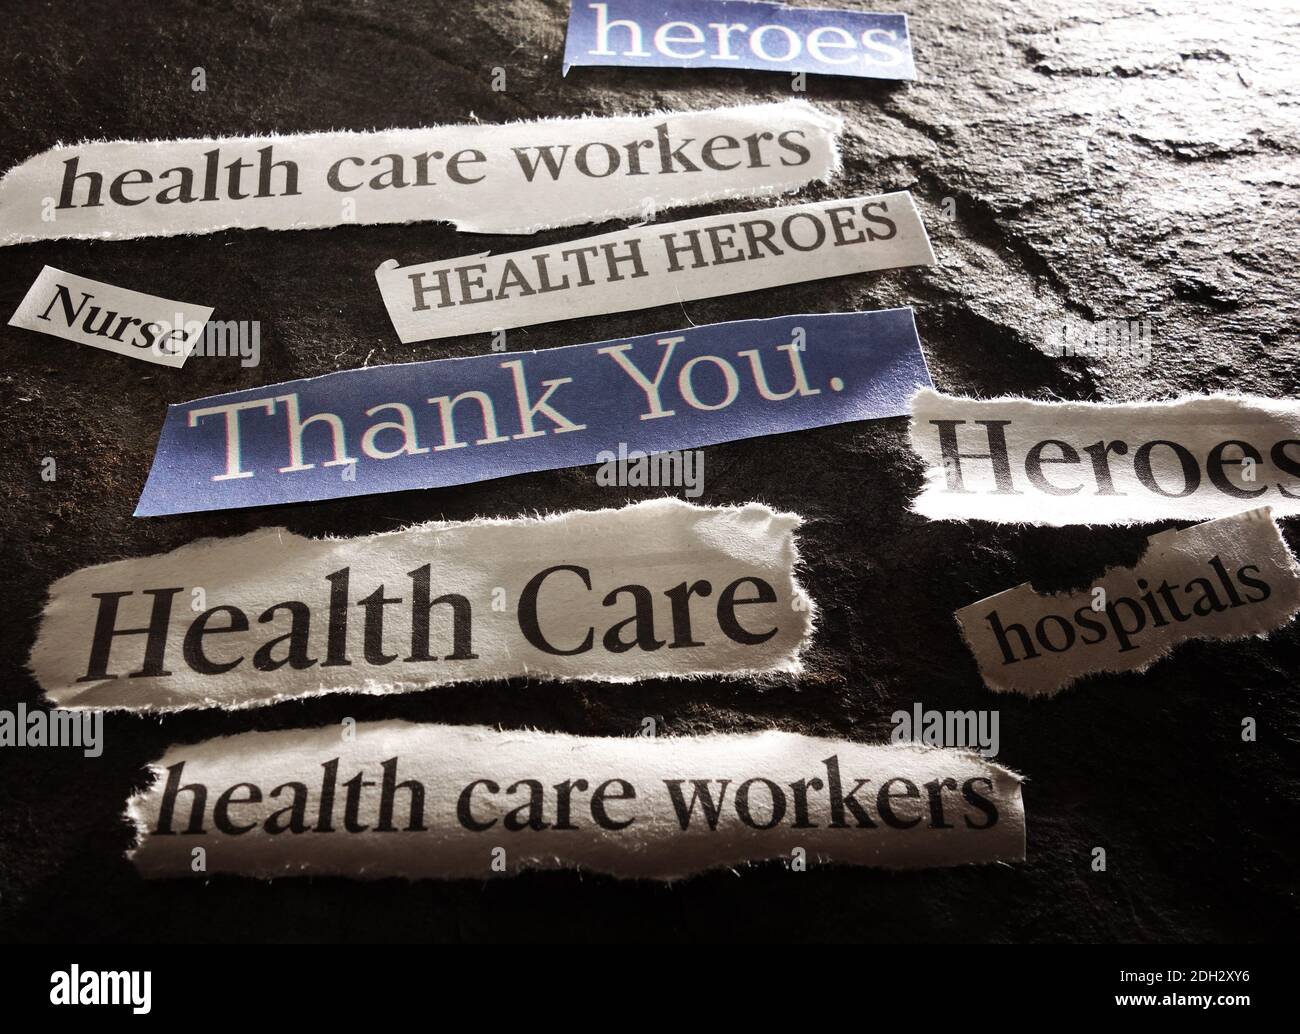 Thank You news headline for hero healthcare workers during Coronavirus Stock Photo